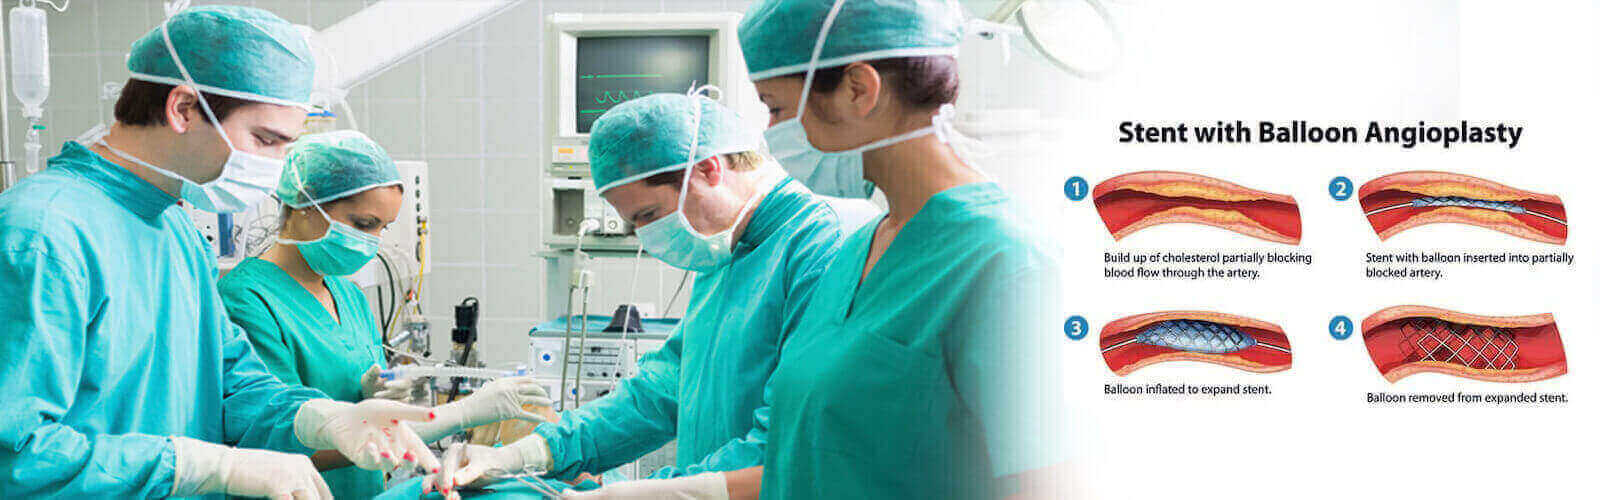 Angioplasty Surgery in Nebraska